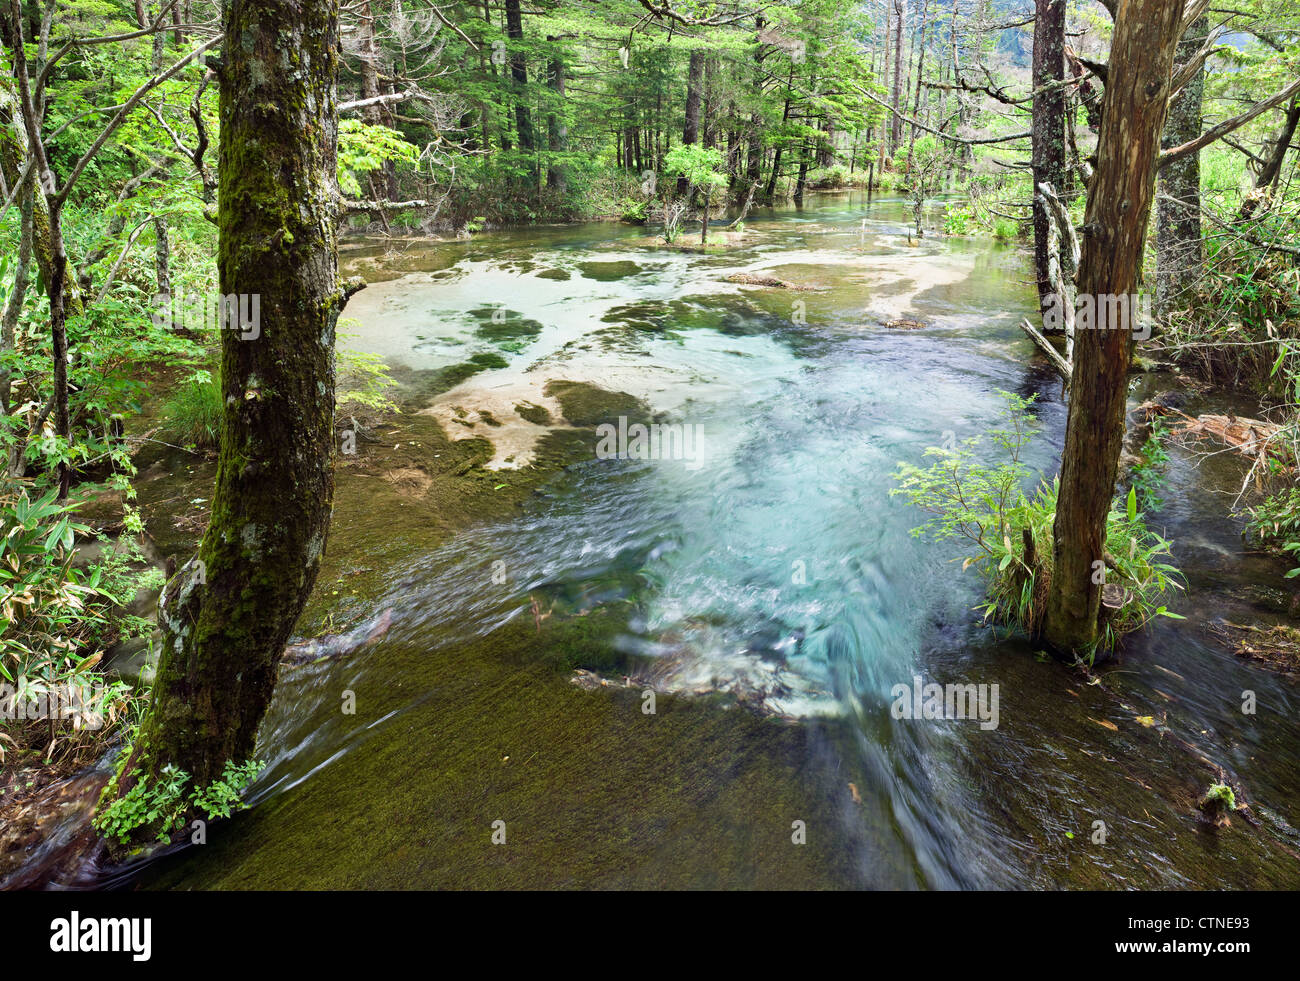 The natural spring fed streams of Kamikochi National Park, Japan Stock Photo